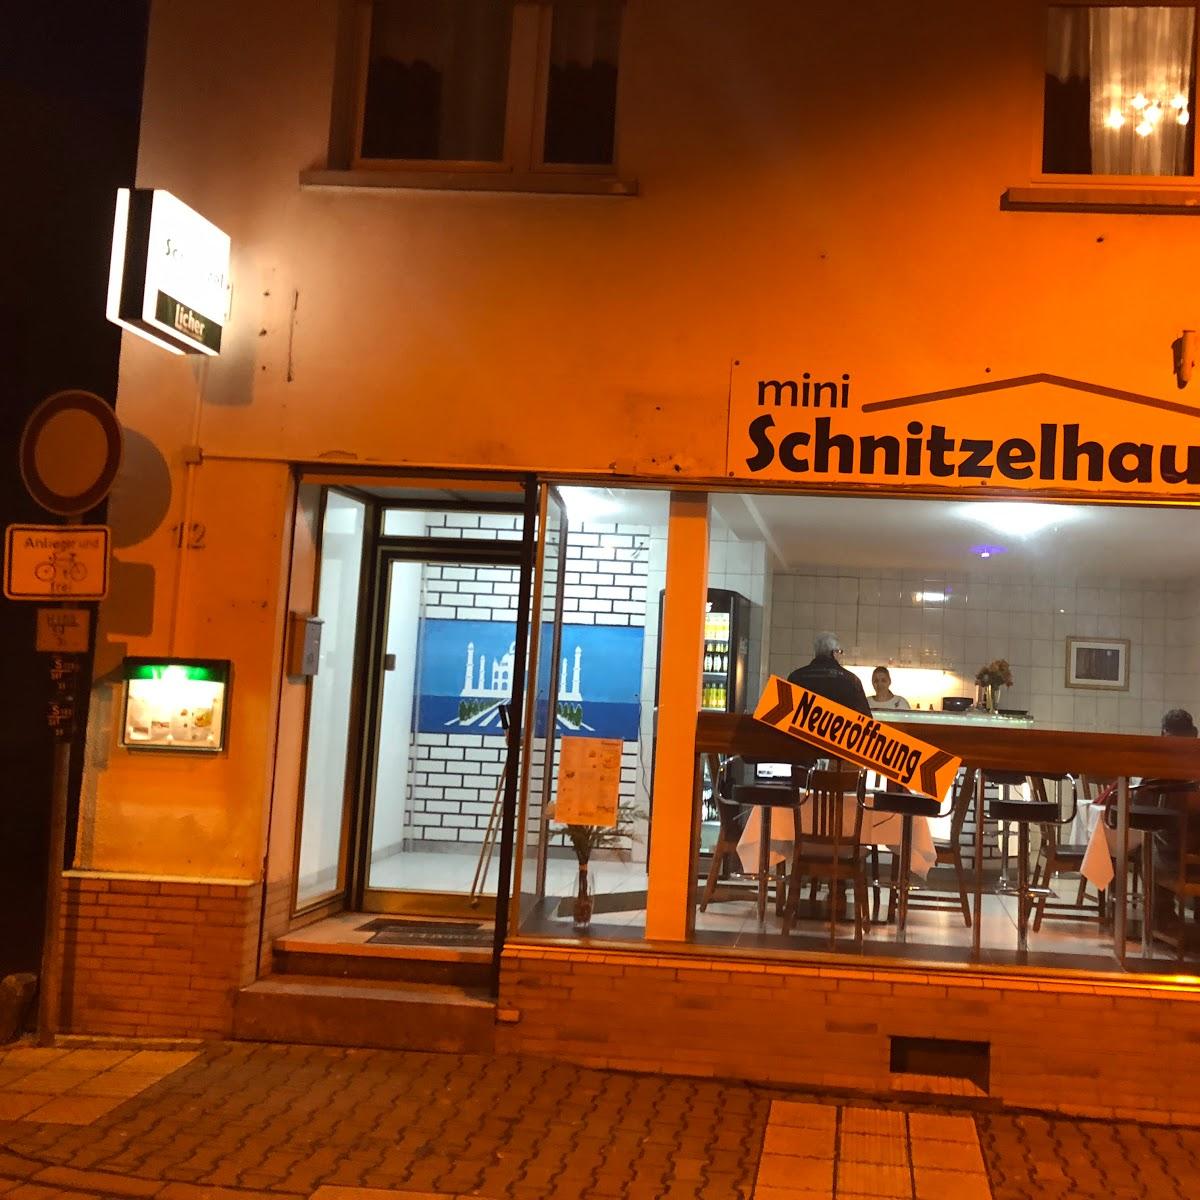 Restaurant "Mini Schnitzelhaus" in Ober-Mörlen